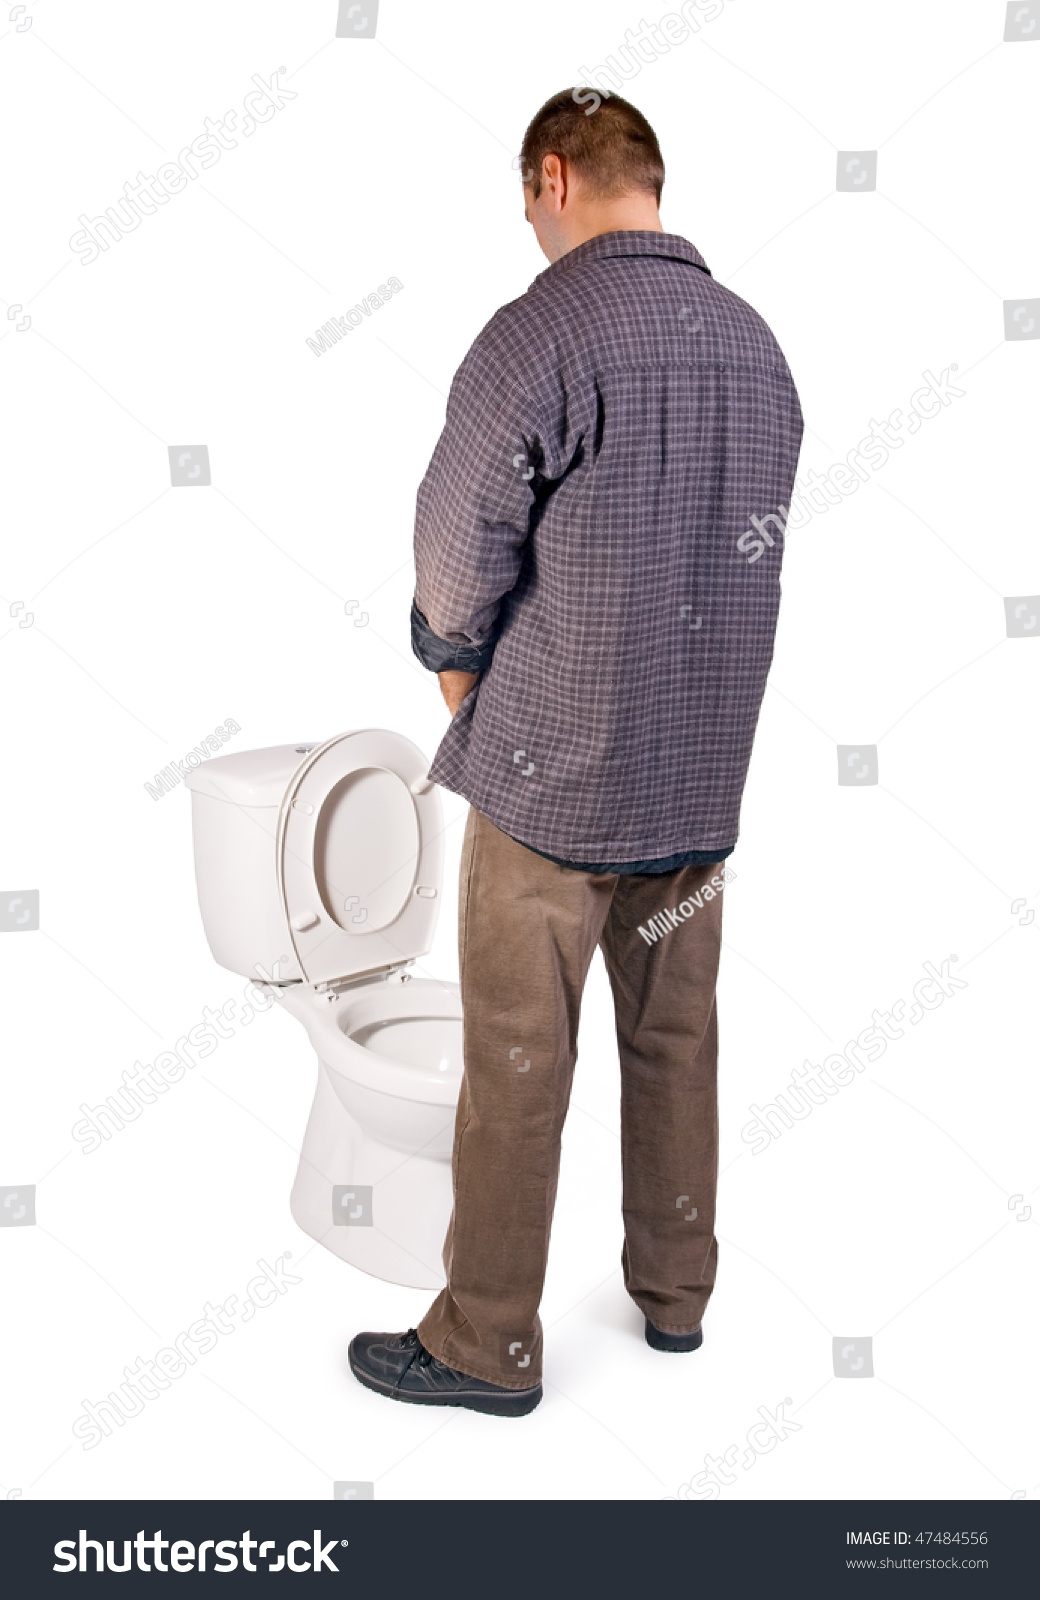 clipart man peeing - photo #50